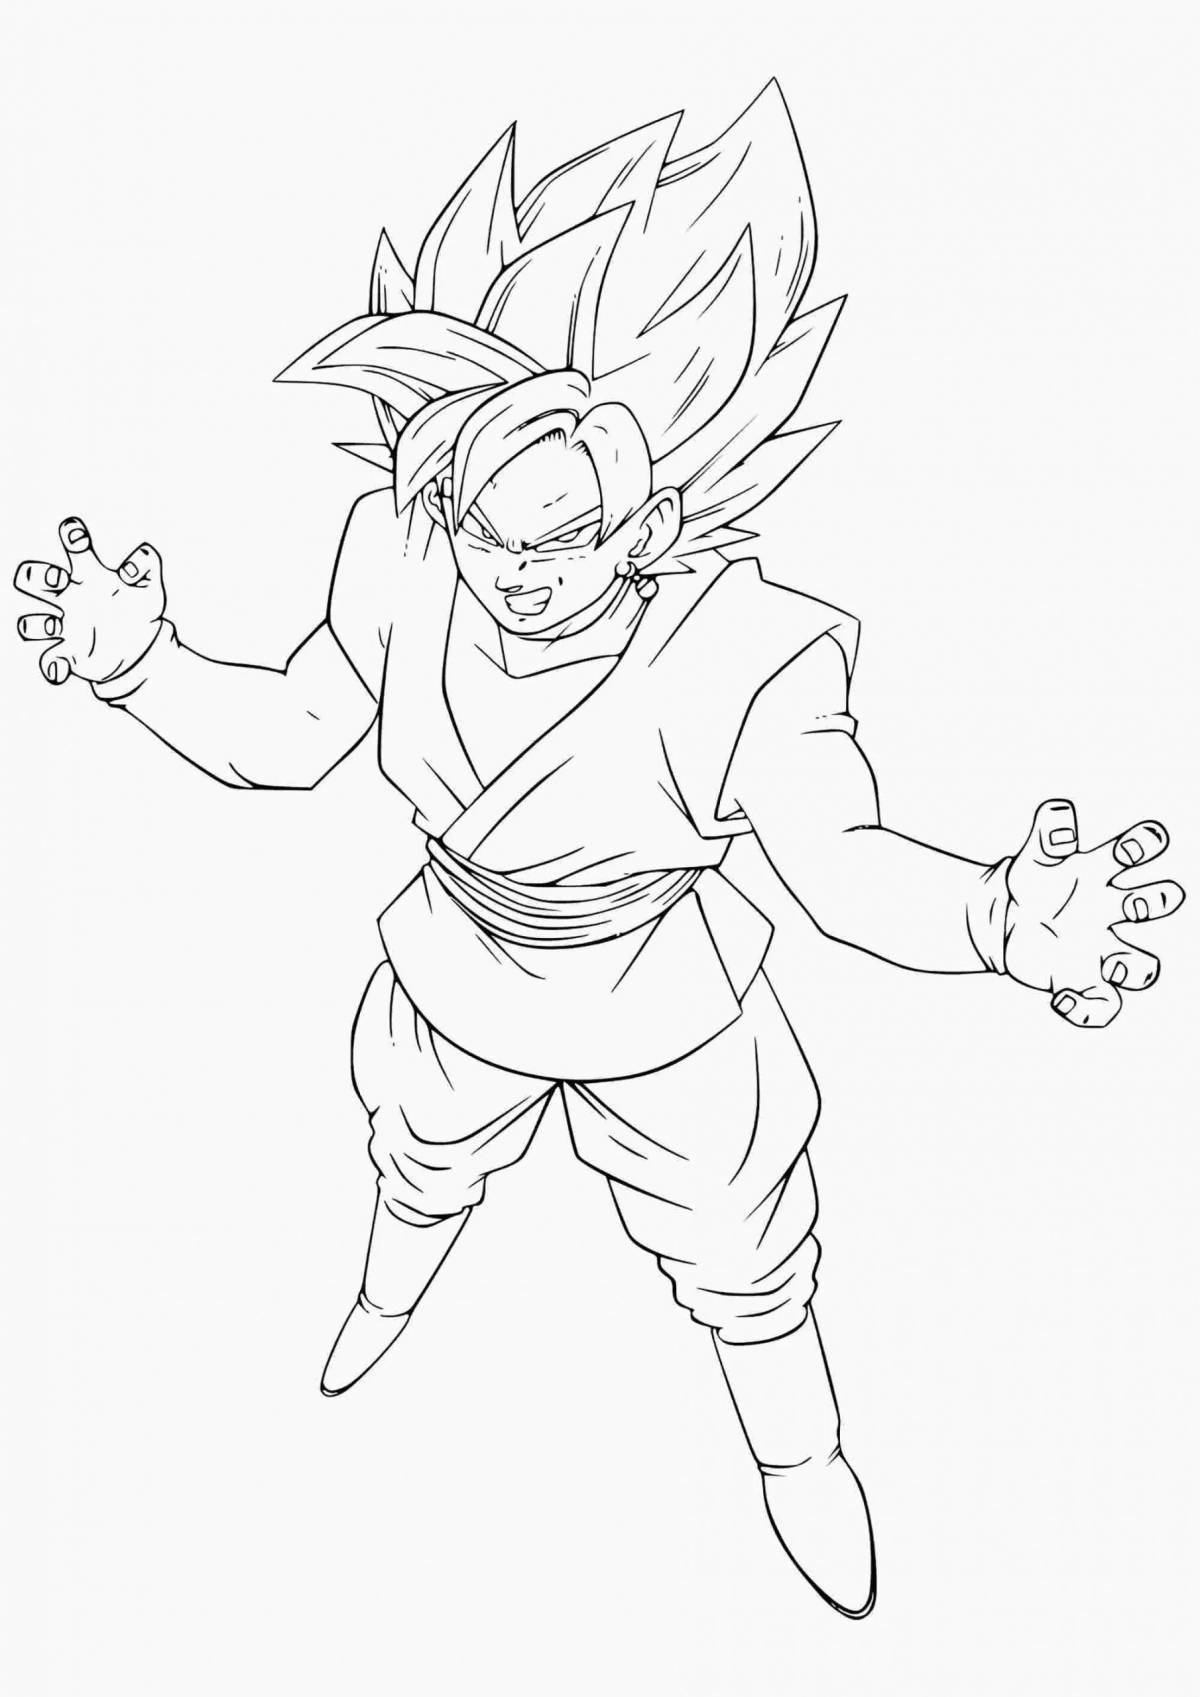 Goku bright coloring